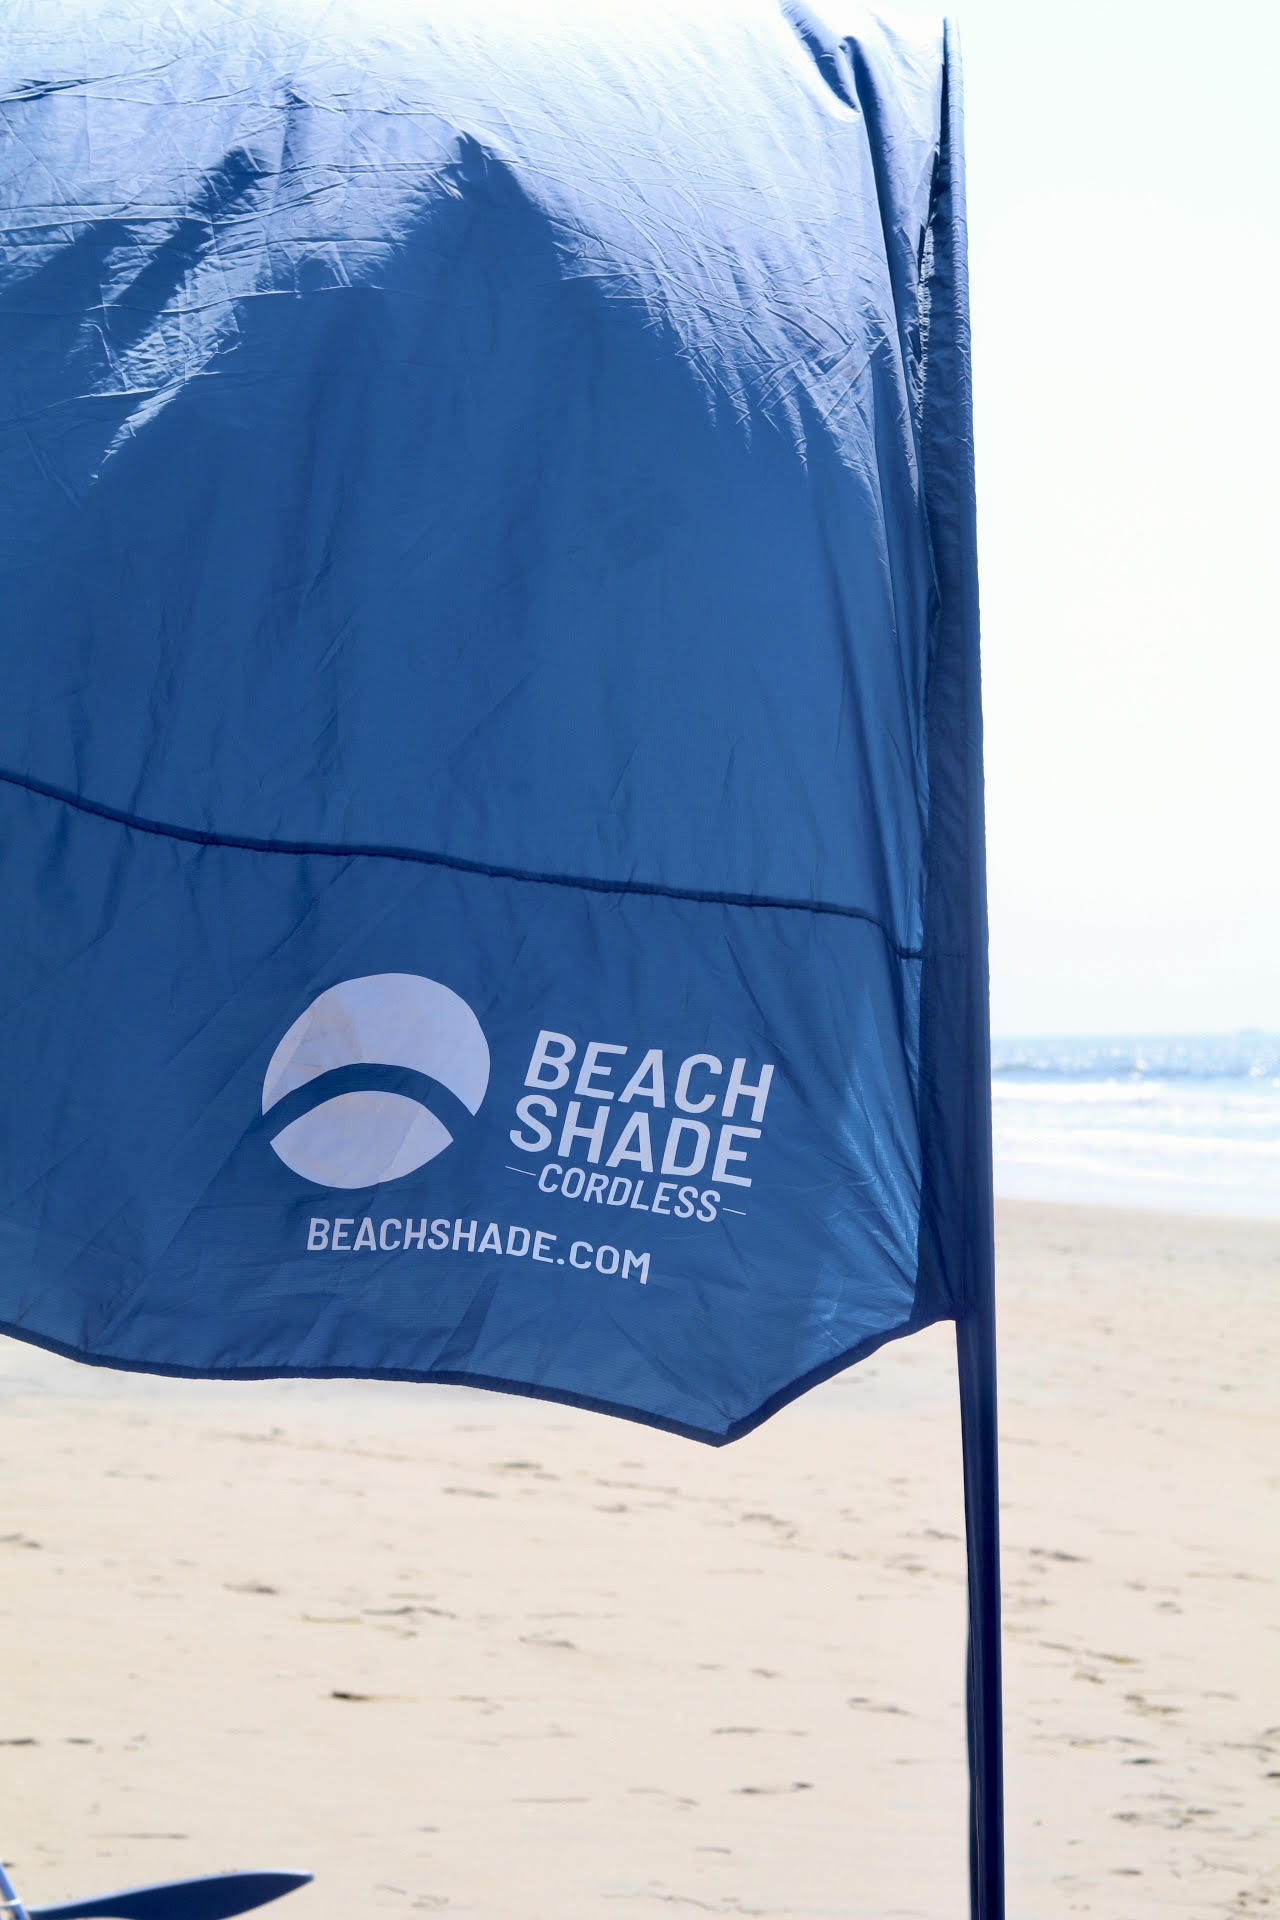 Beach Shade Cordless - Free Shipping!